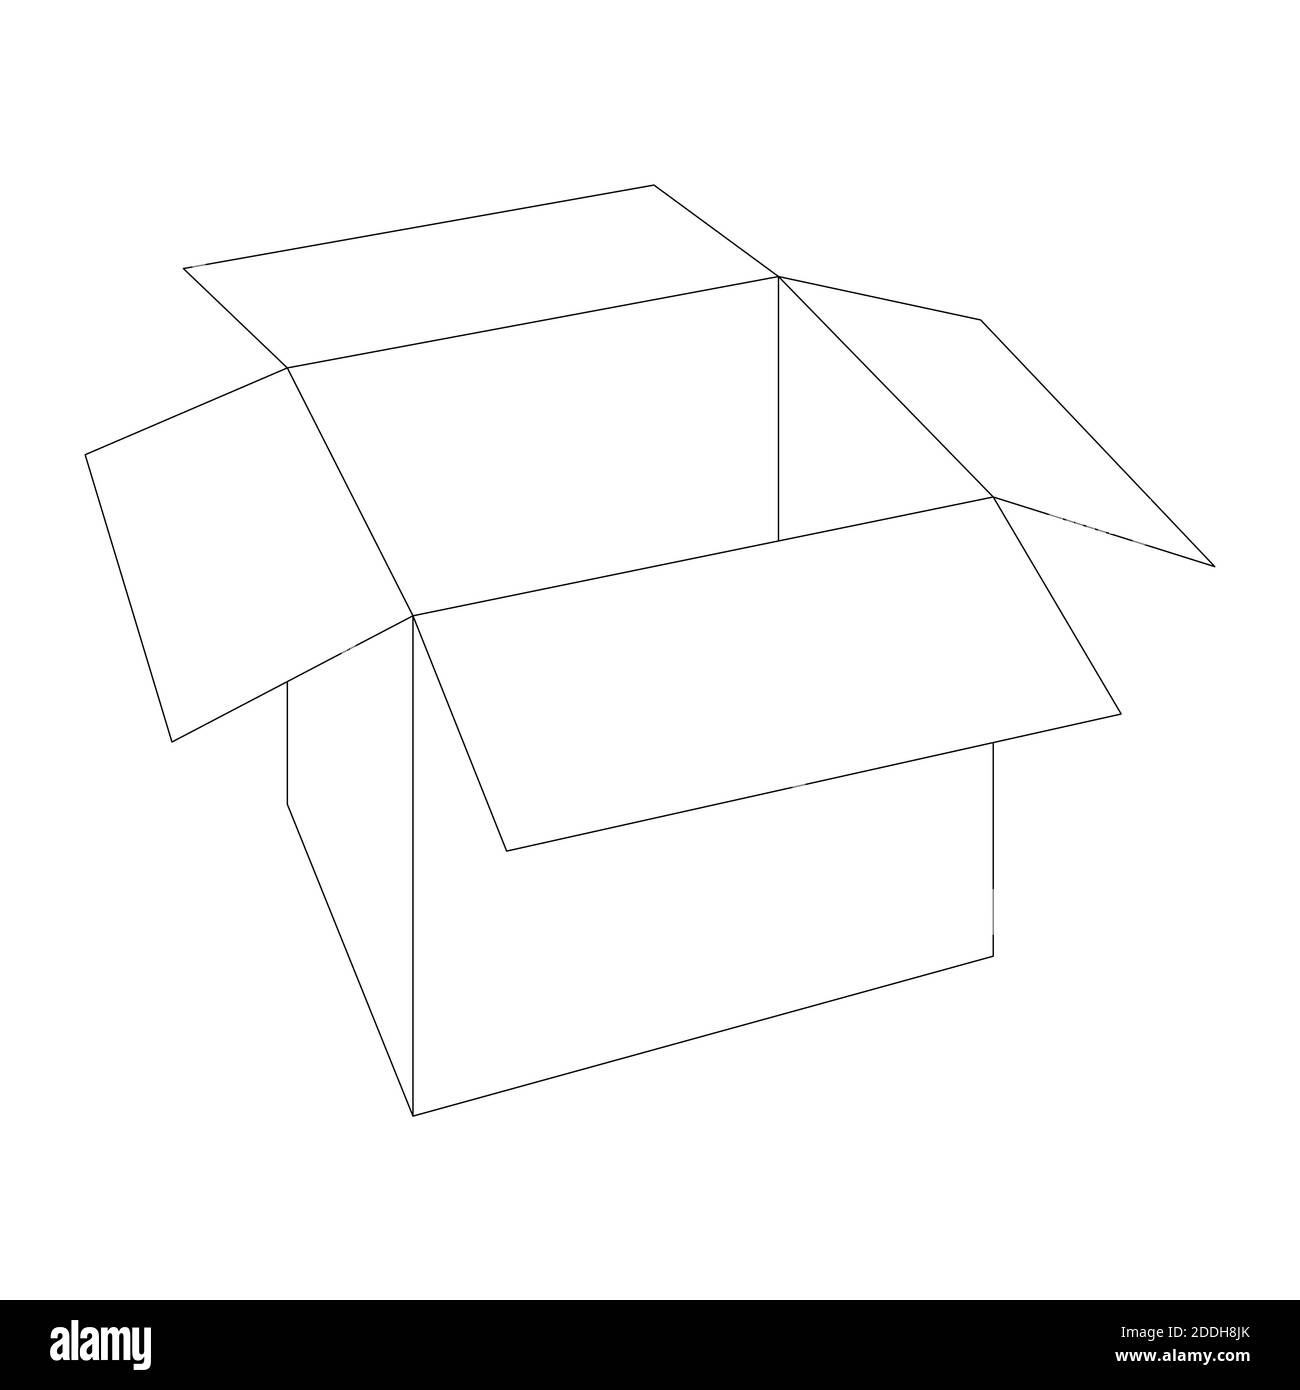 Open Box Coloring Page - Caja De Carton Para Colorear - Free